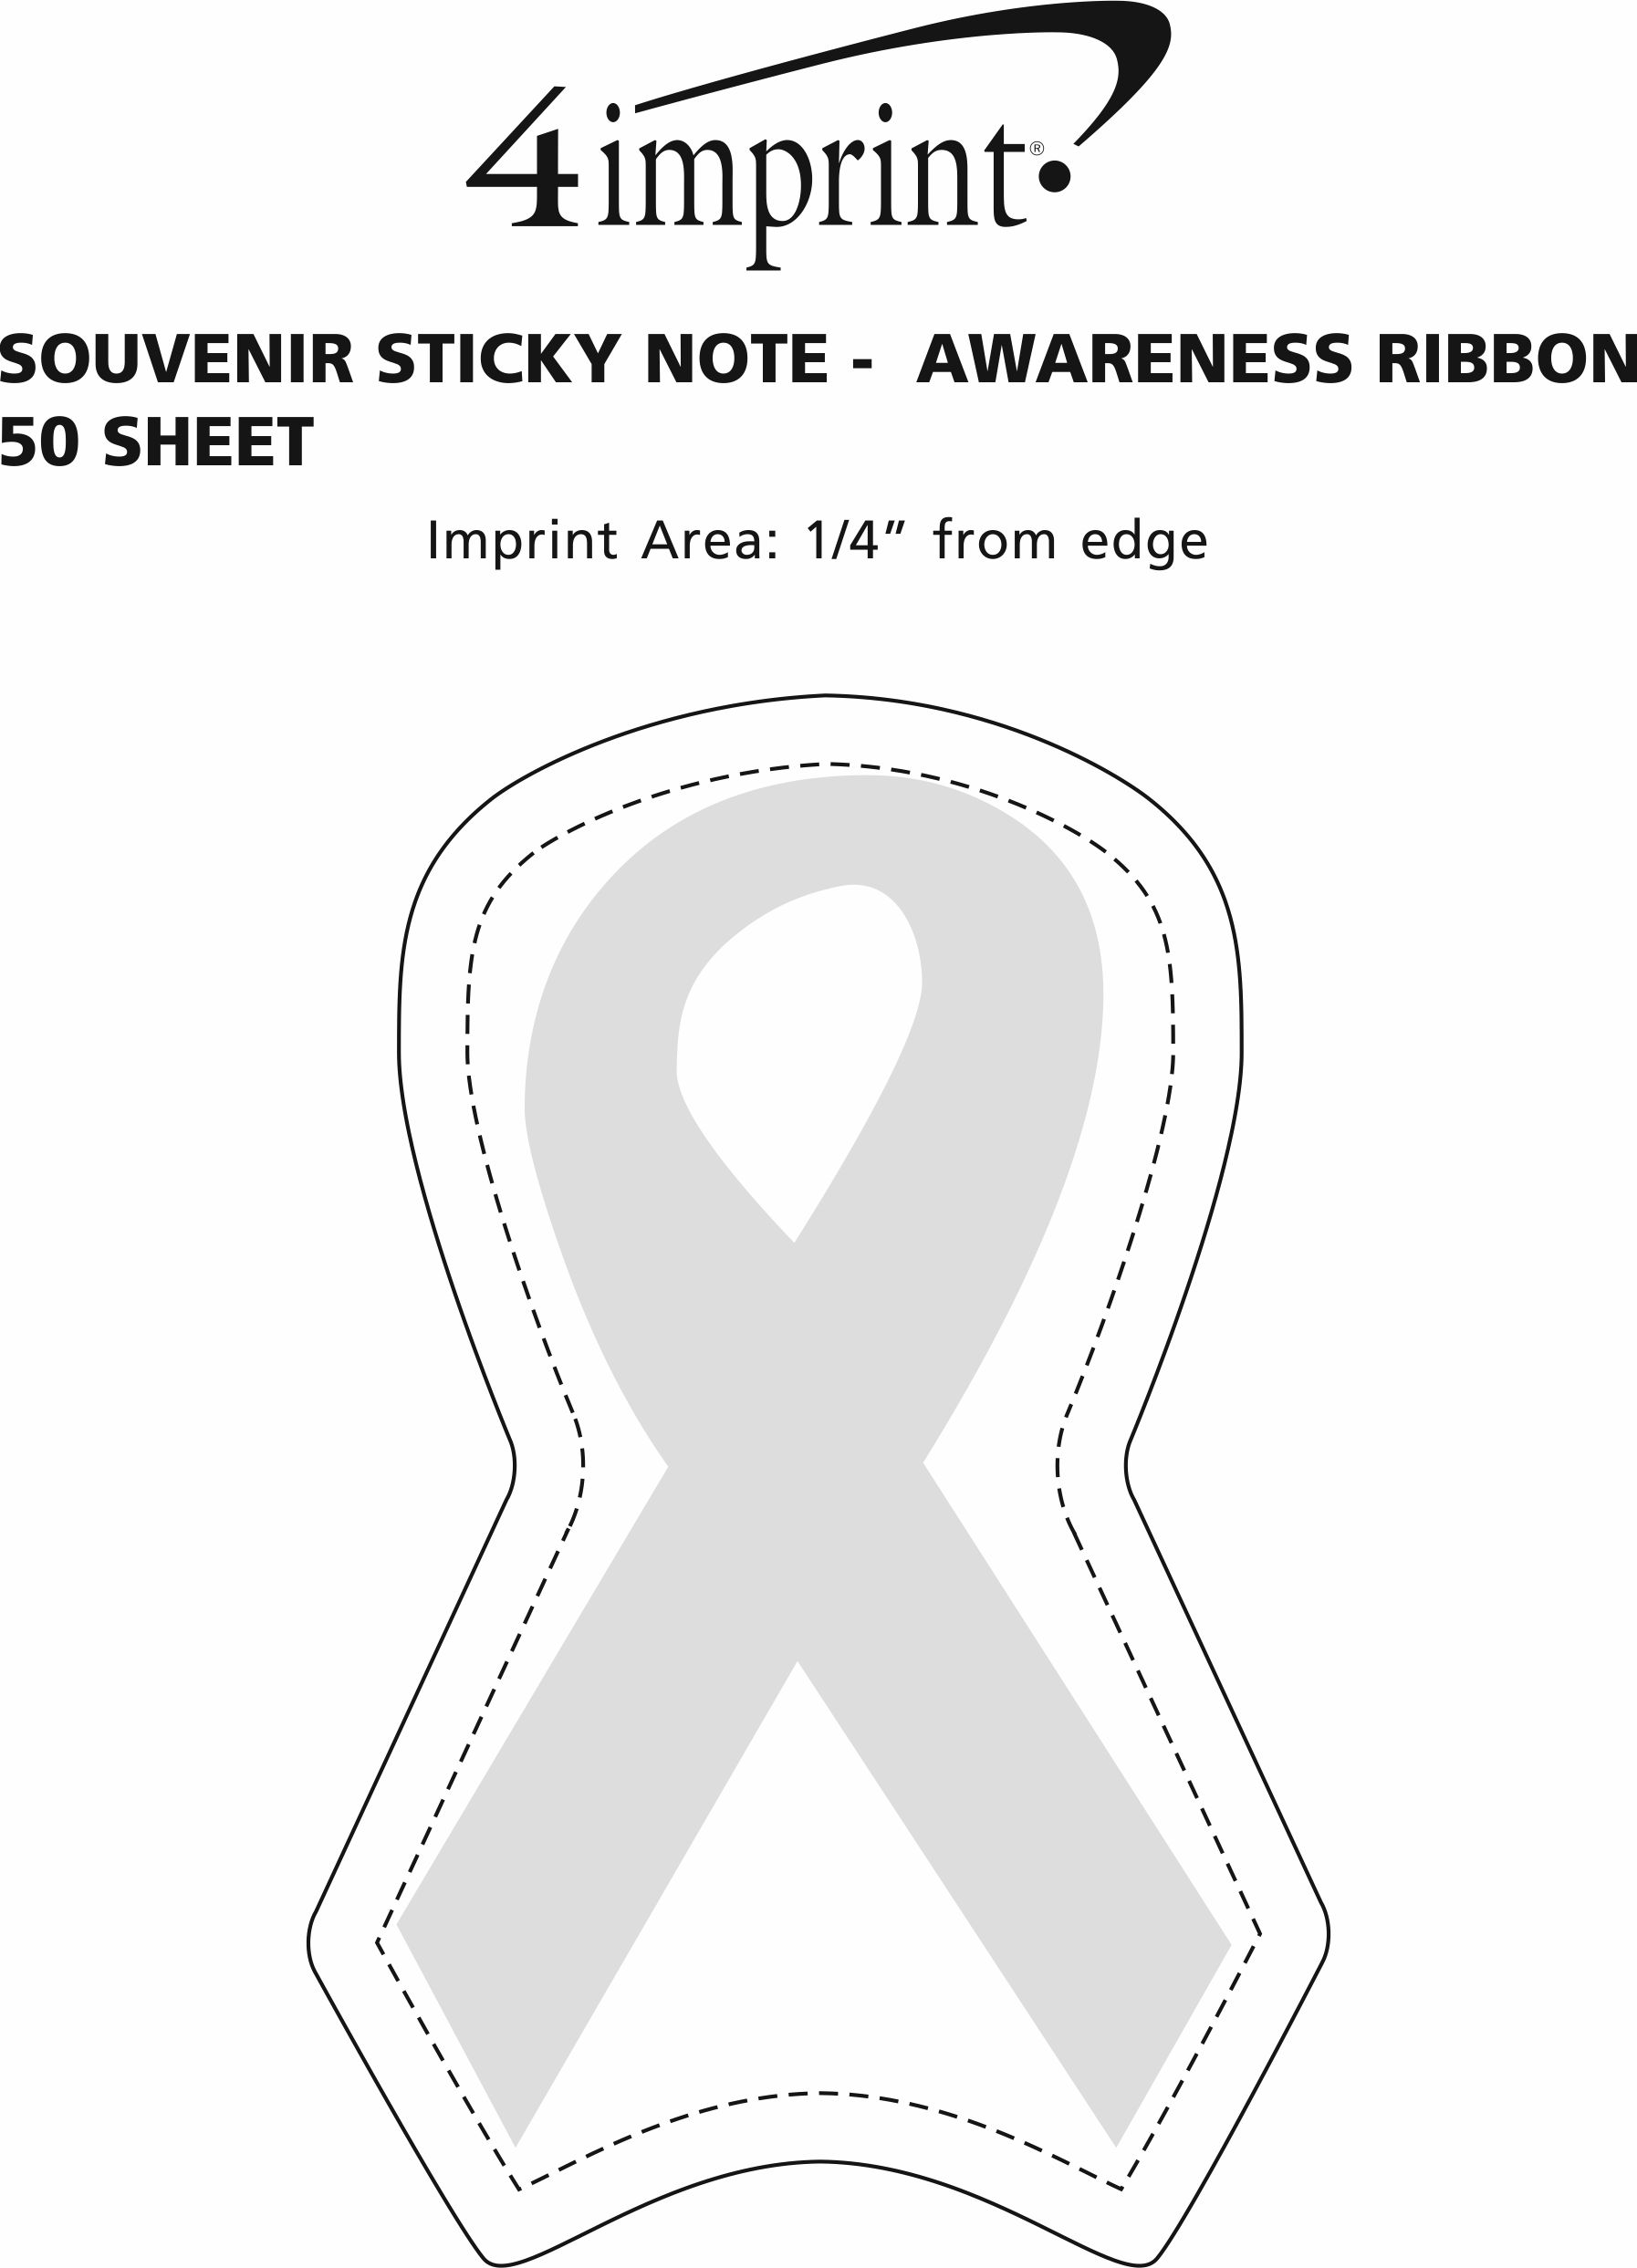 Imprint Area of Souvenir Sticky Note - Awareness Ribbon - 50 Sheet